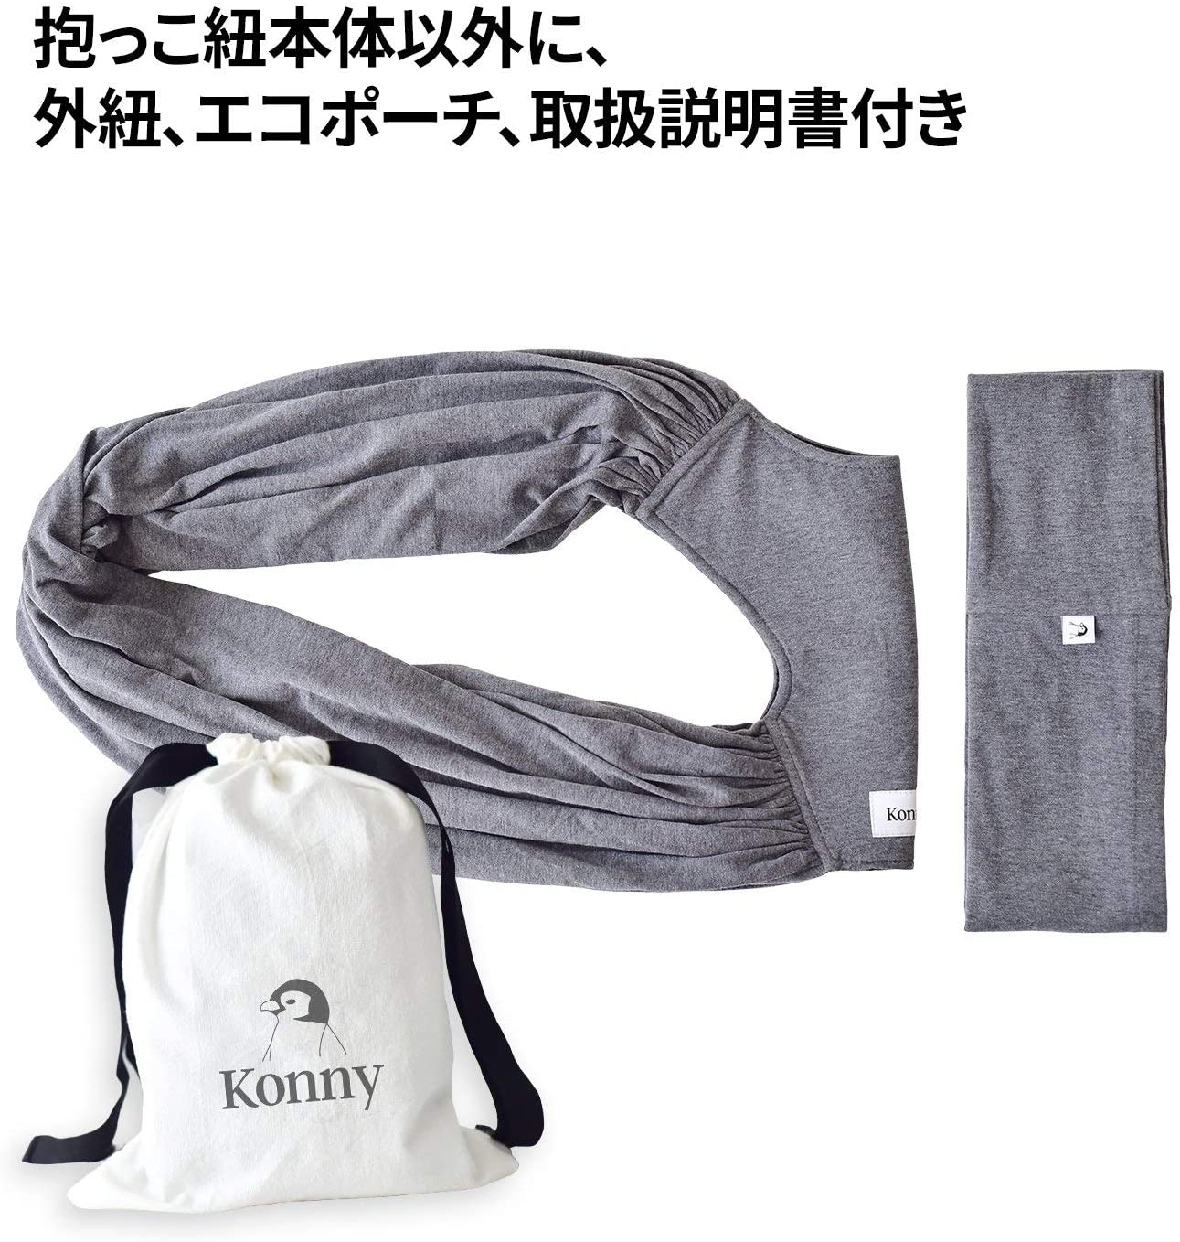 Konny(コニー) 抱っこ紐の商品画像6 